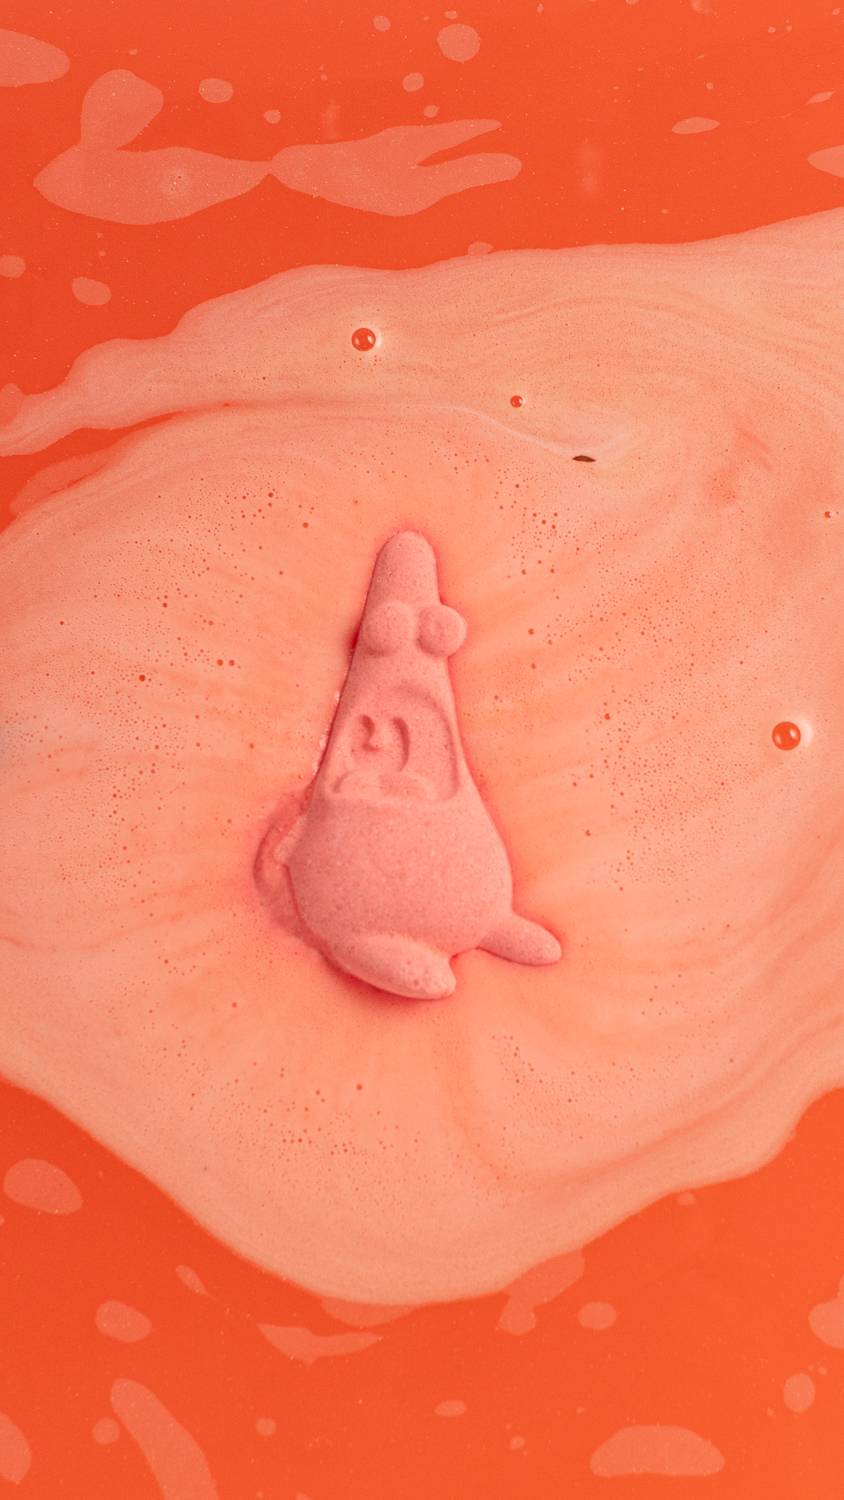 Surprised Patrick Bath Bomb sits among foamy swirls of deep coral pink.